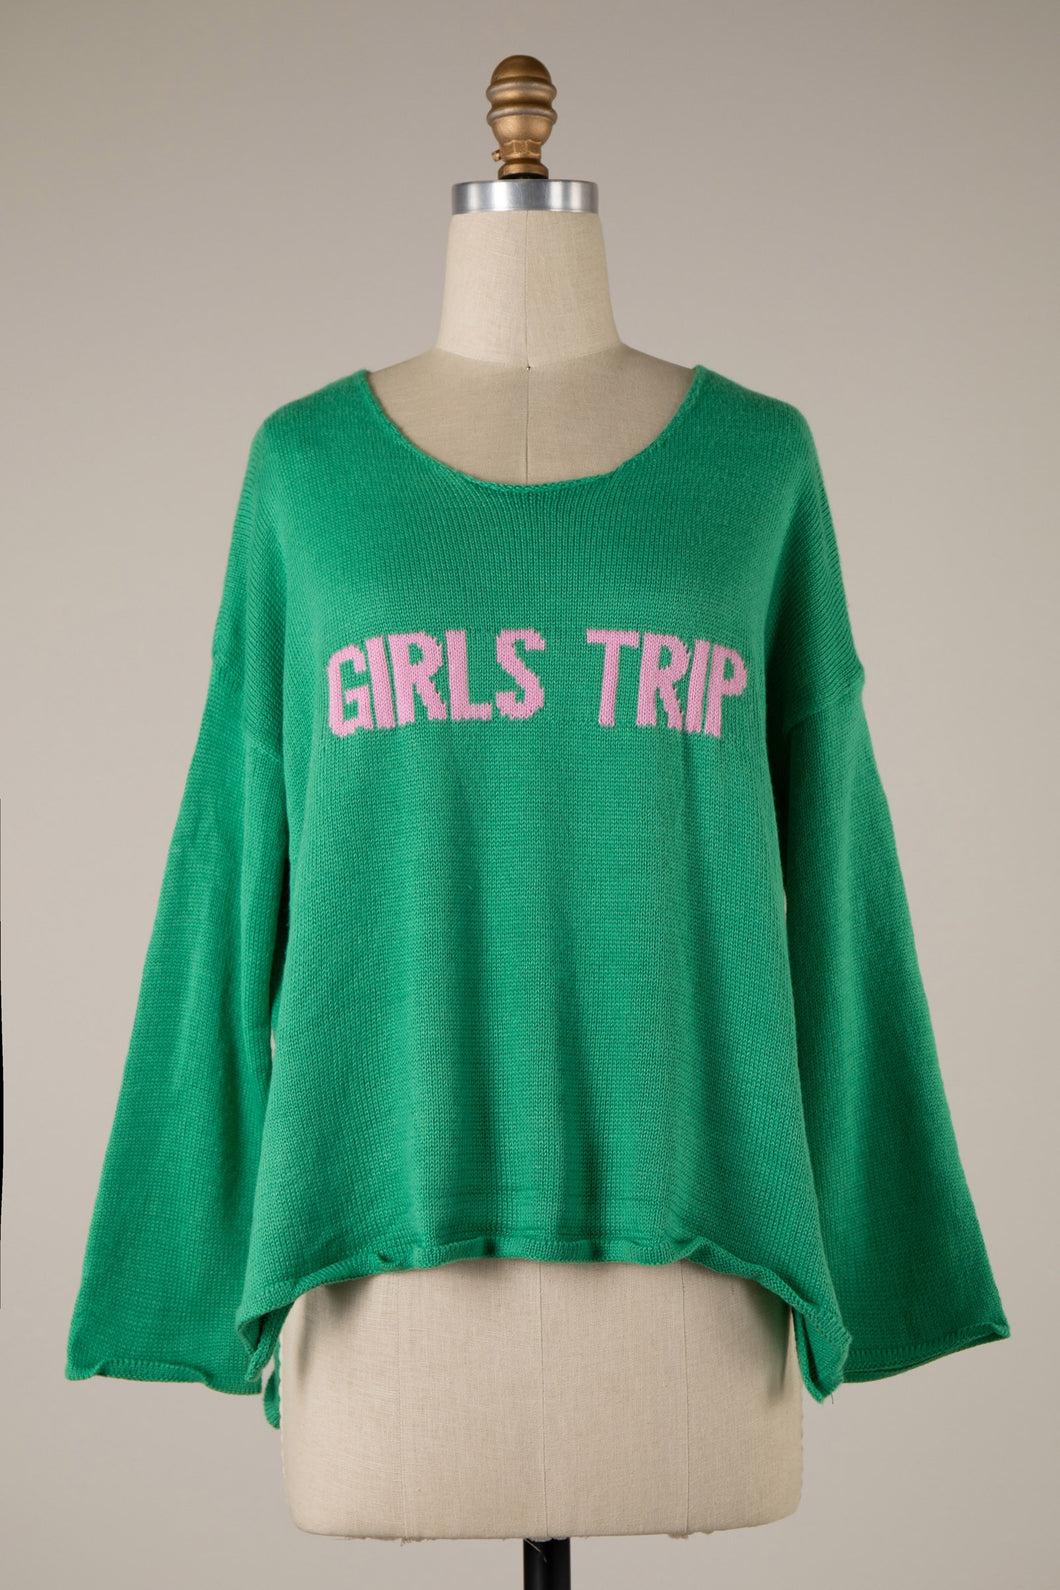 Girls Trip Sweater